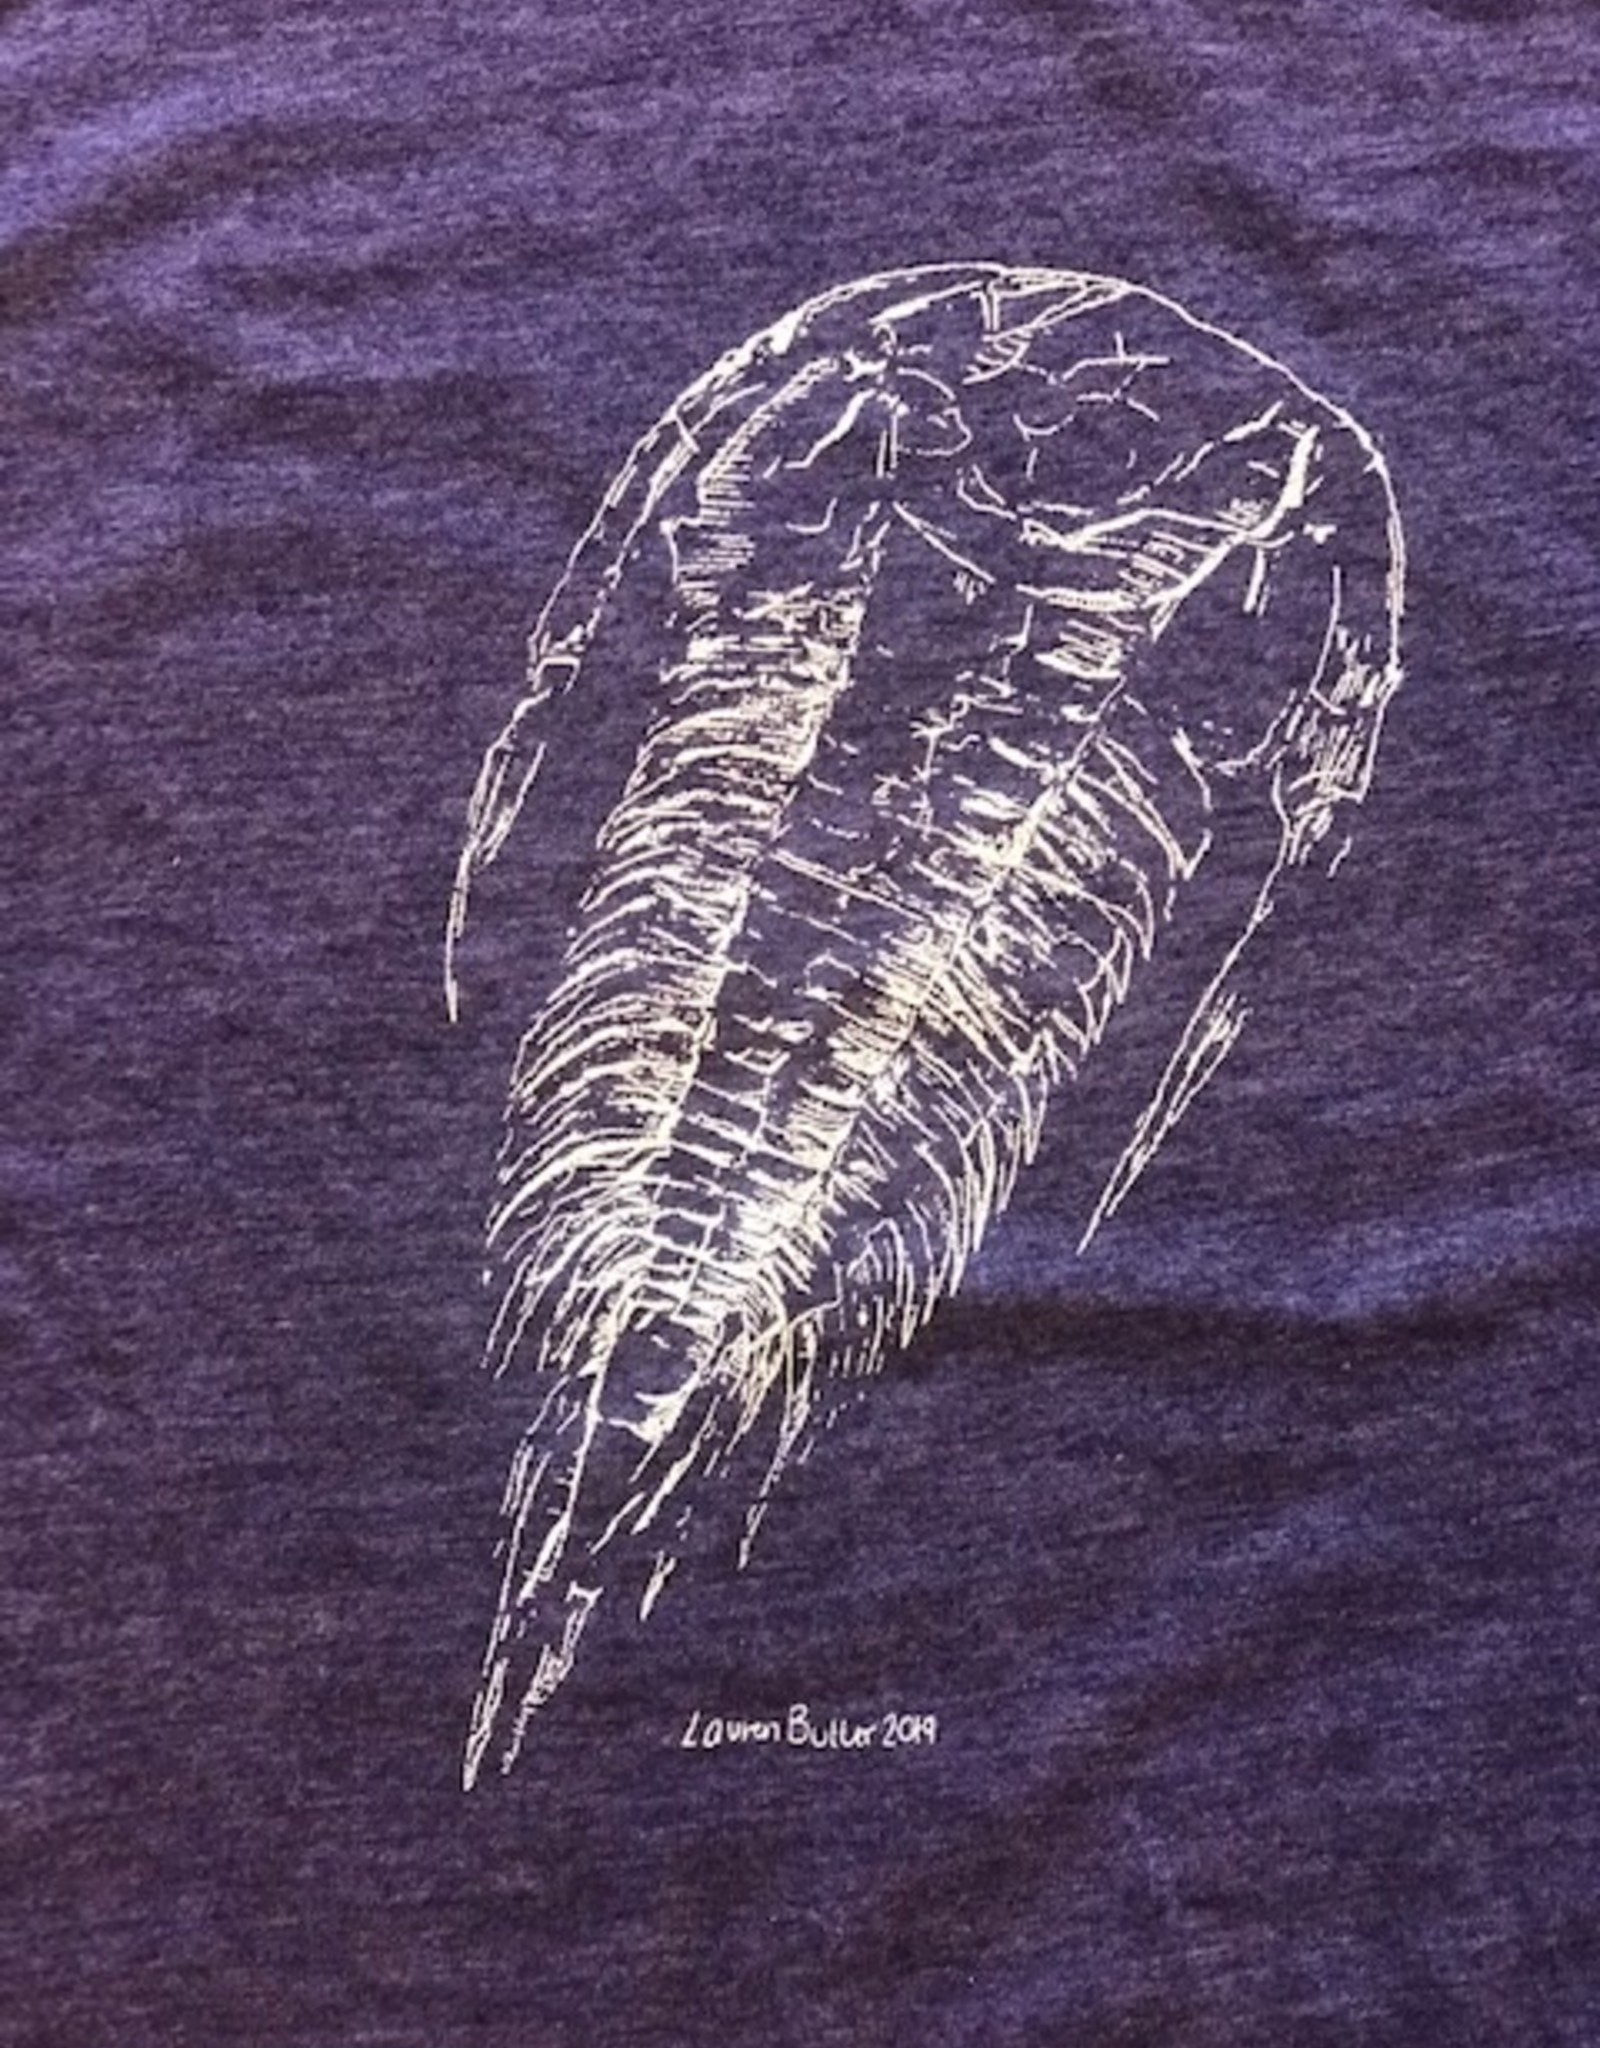 MR Trilobite Shirt